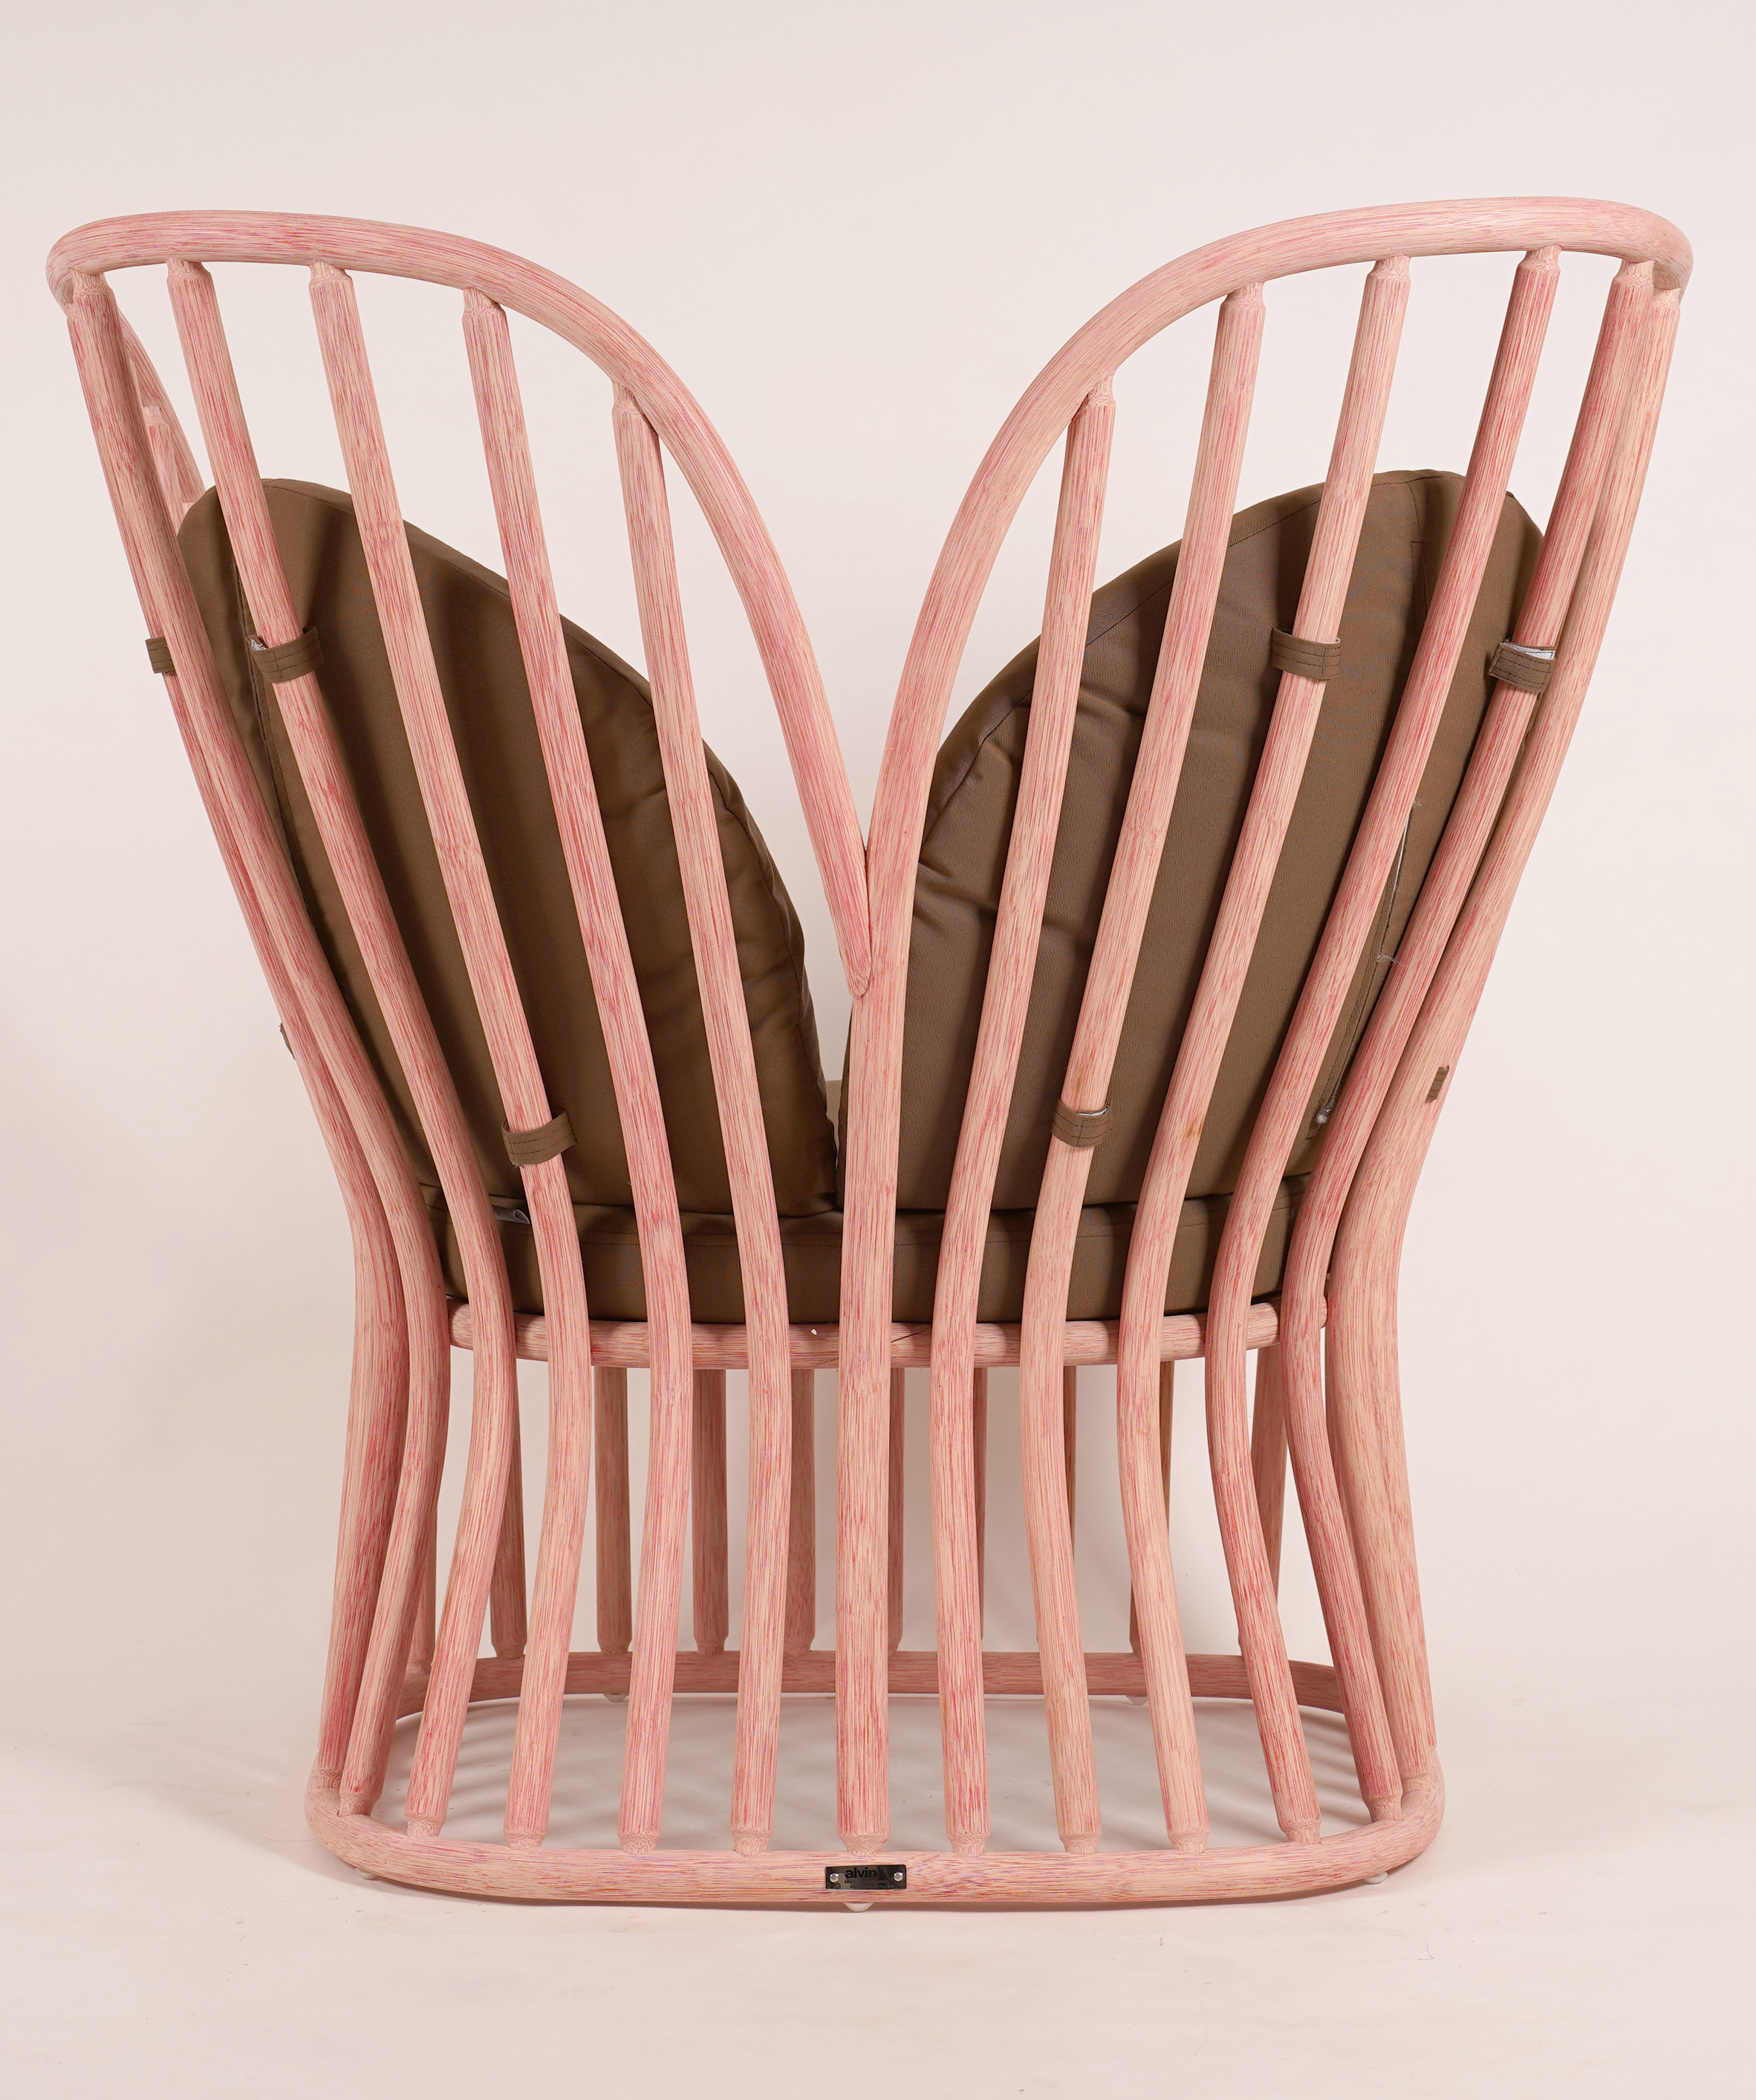 Tropicália Modernity rattan furniture by Alvin T at Milan design week